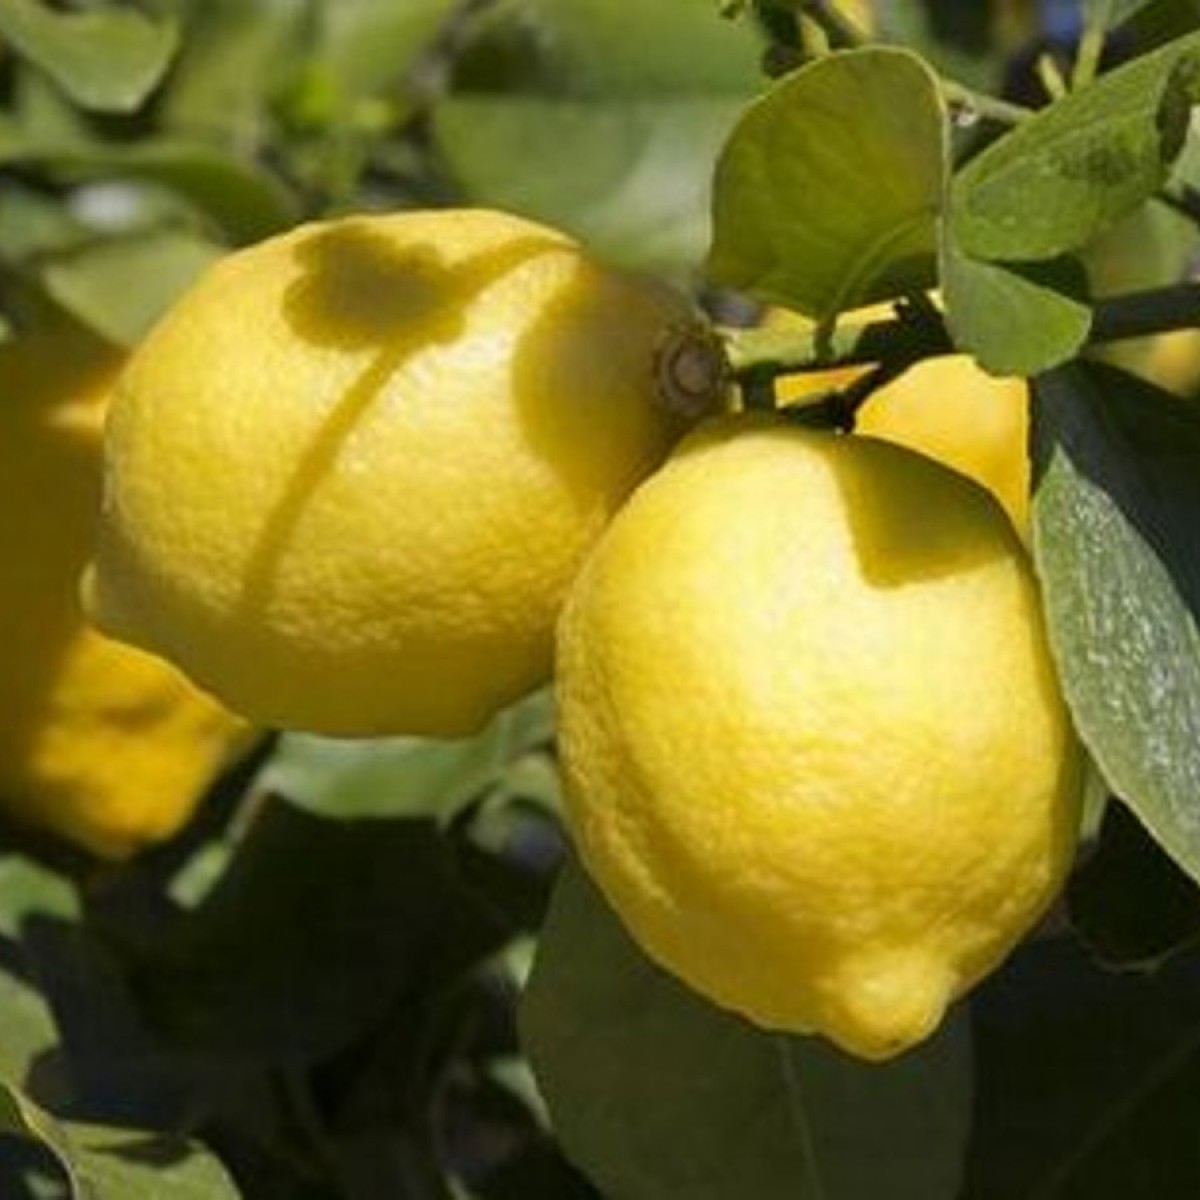 Limoni freschi di Sicilia 3 kg - Frutta e verdura - Foodaloo